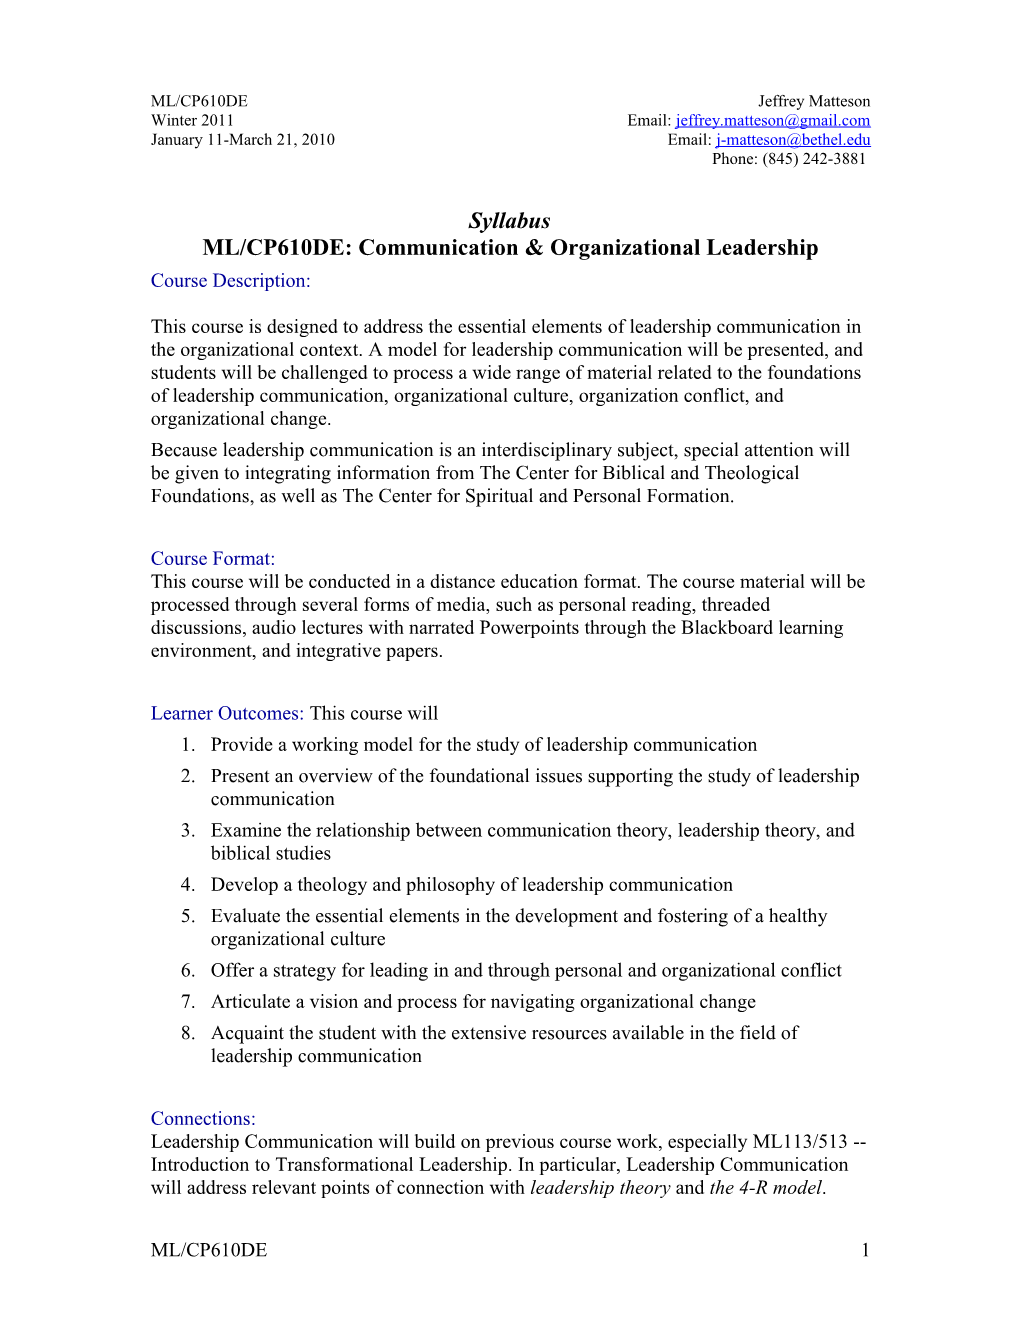 Syllabus - ML/CP610: Communication and Organizational Leadership